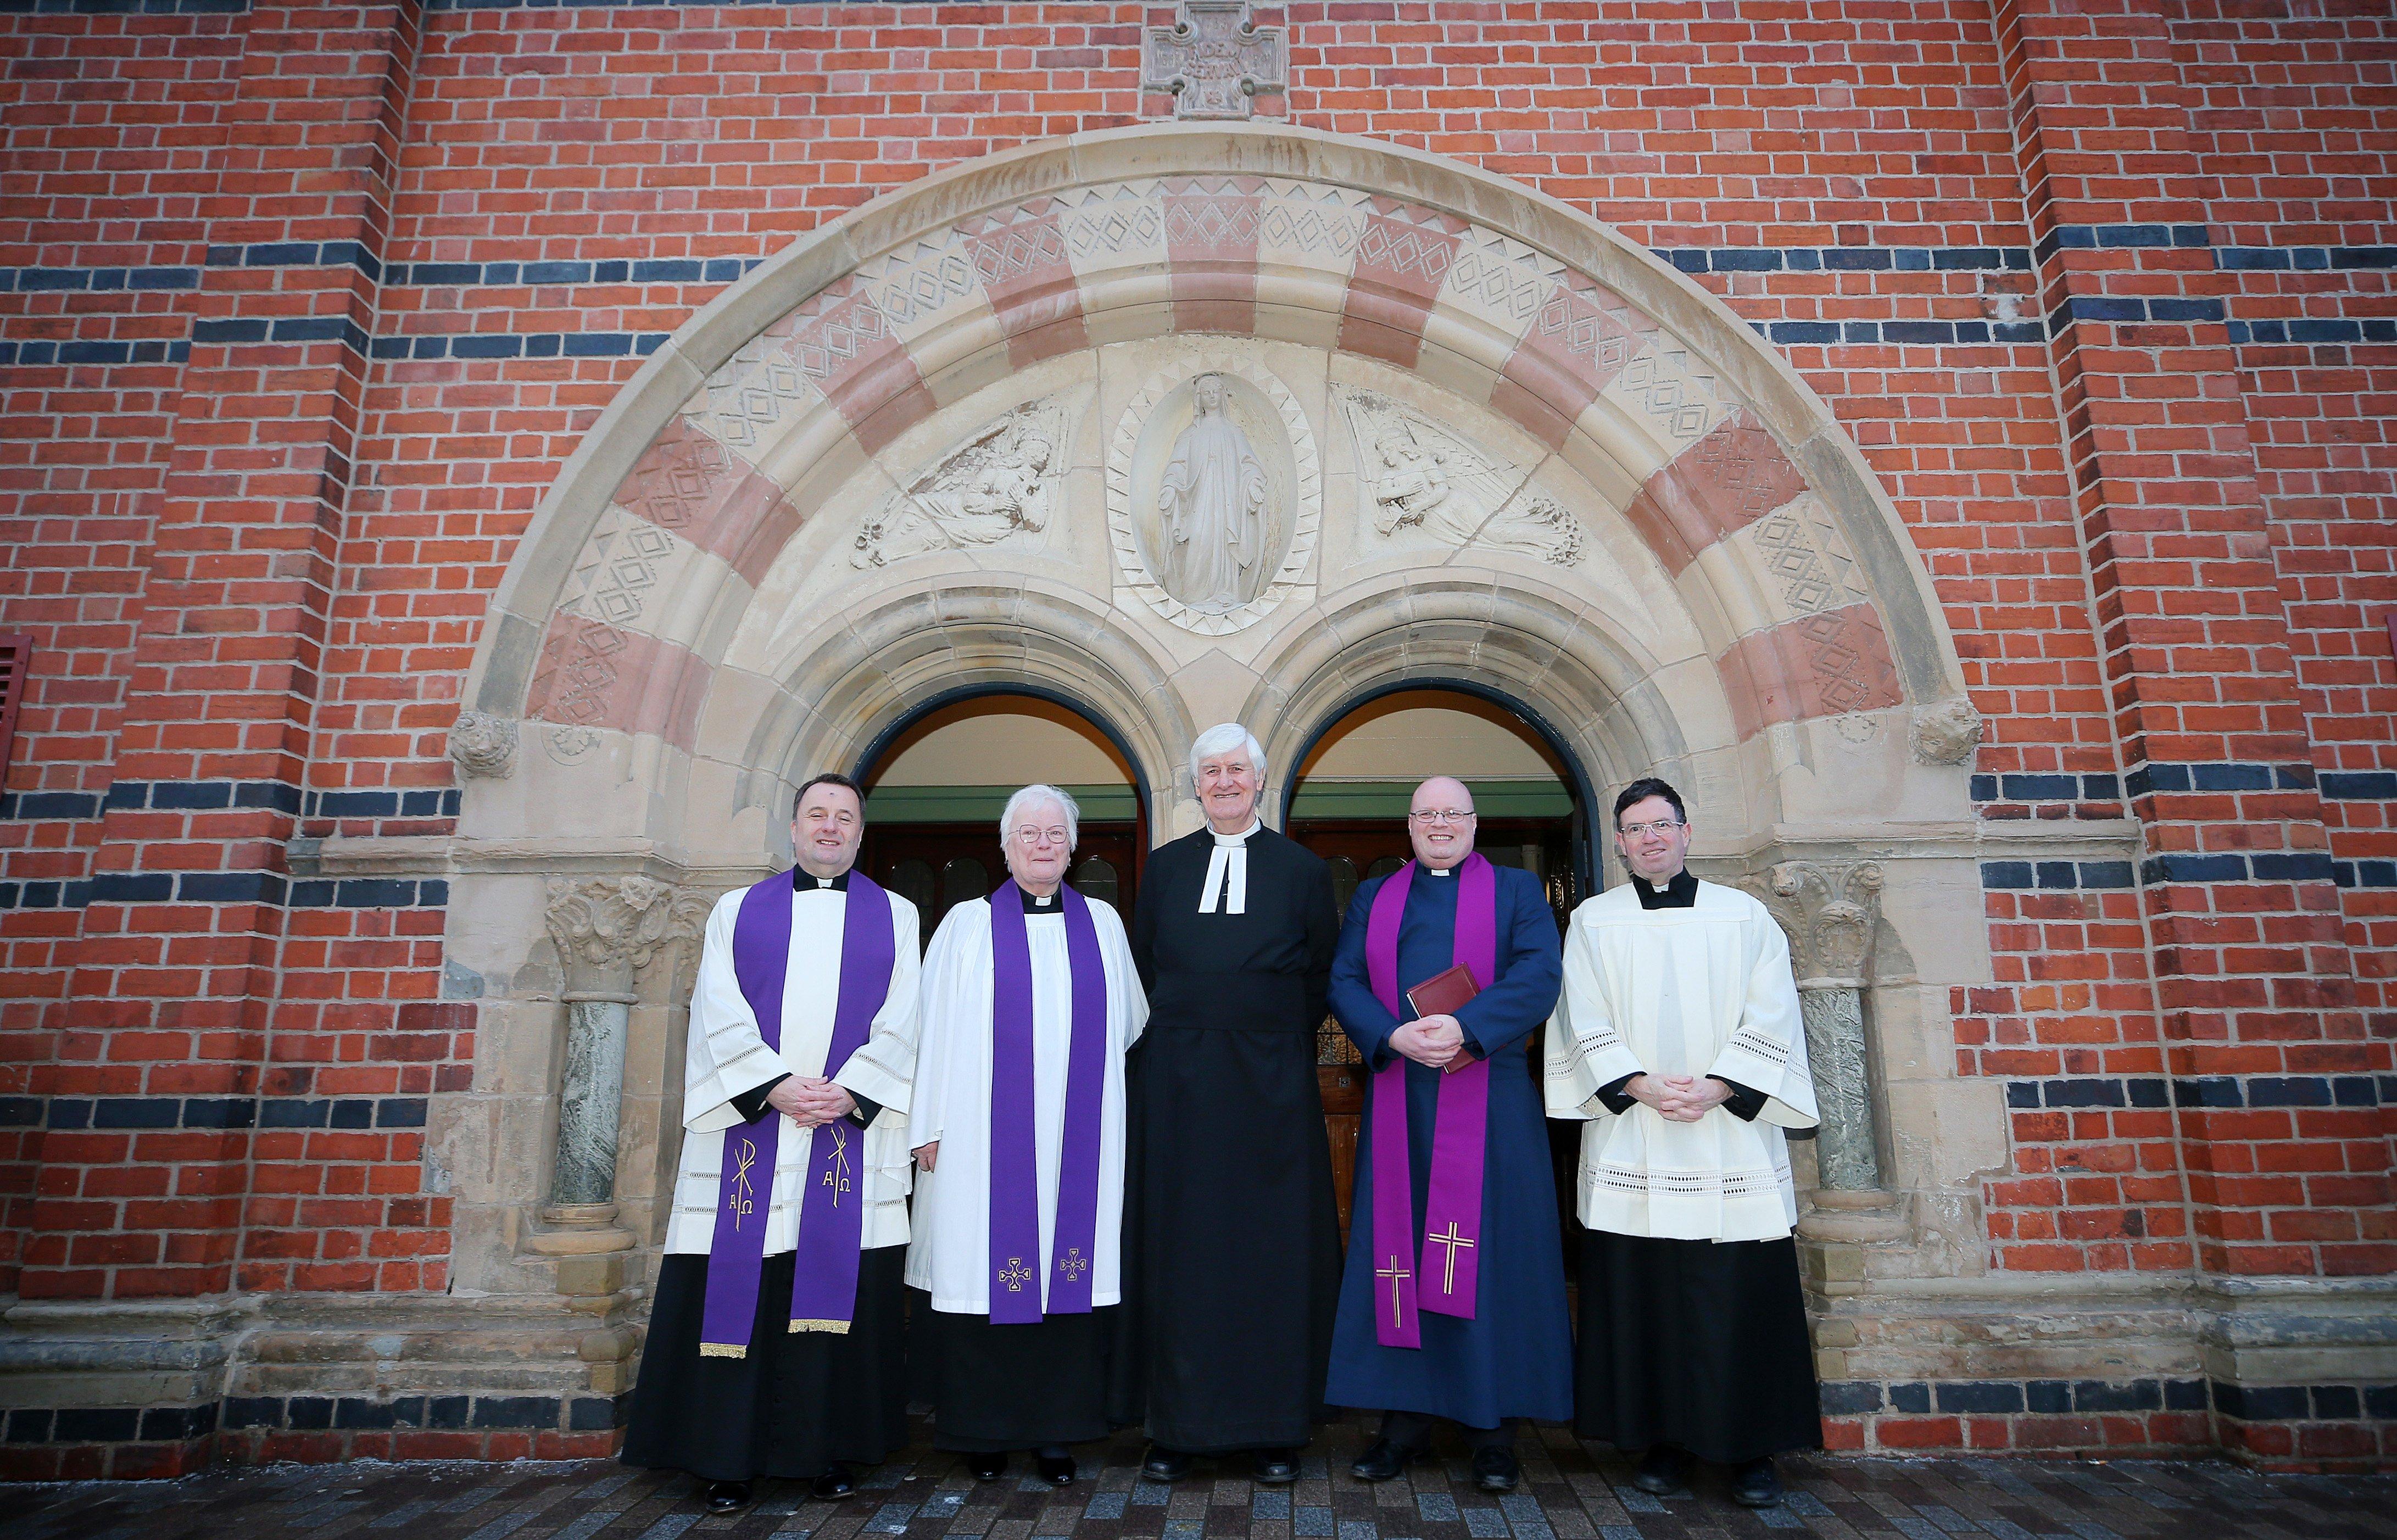 Fr Tim Bartlett, Rev Elizabeth Hanna, Rev Dr Ken Newell, Rev Robin Waugh and Fr Martin Magill meet people outside the church